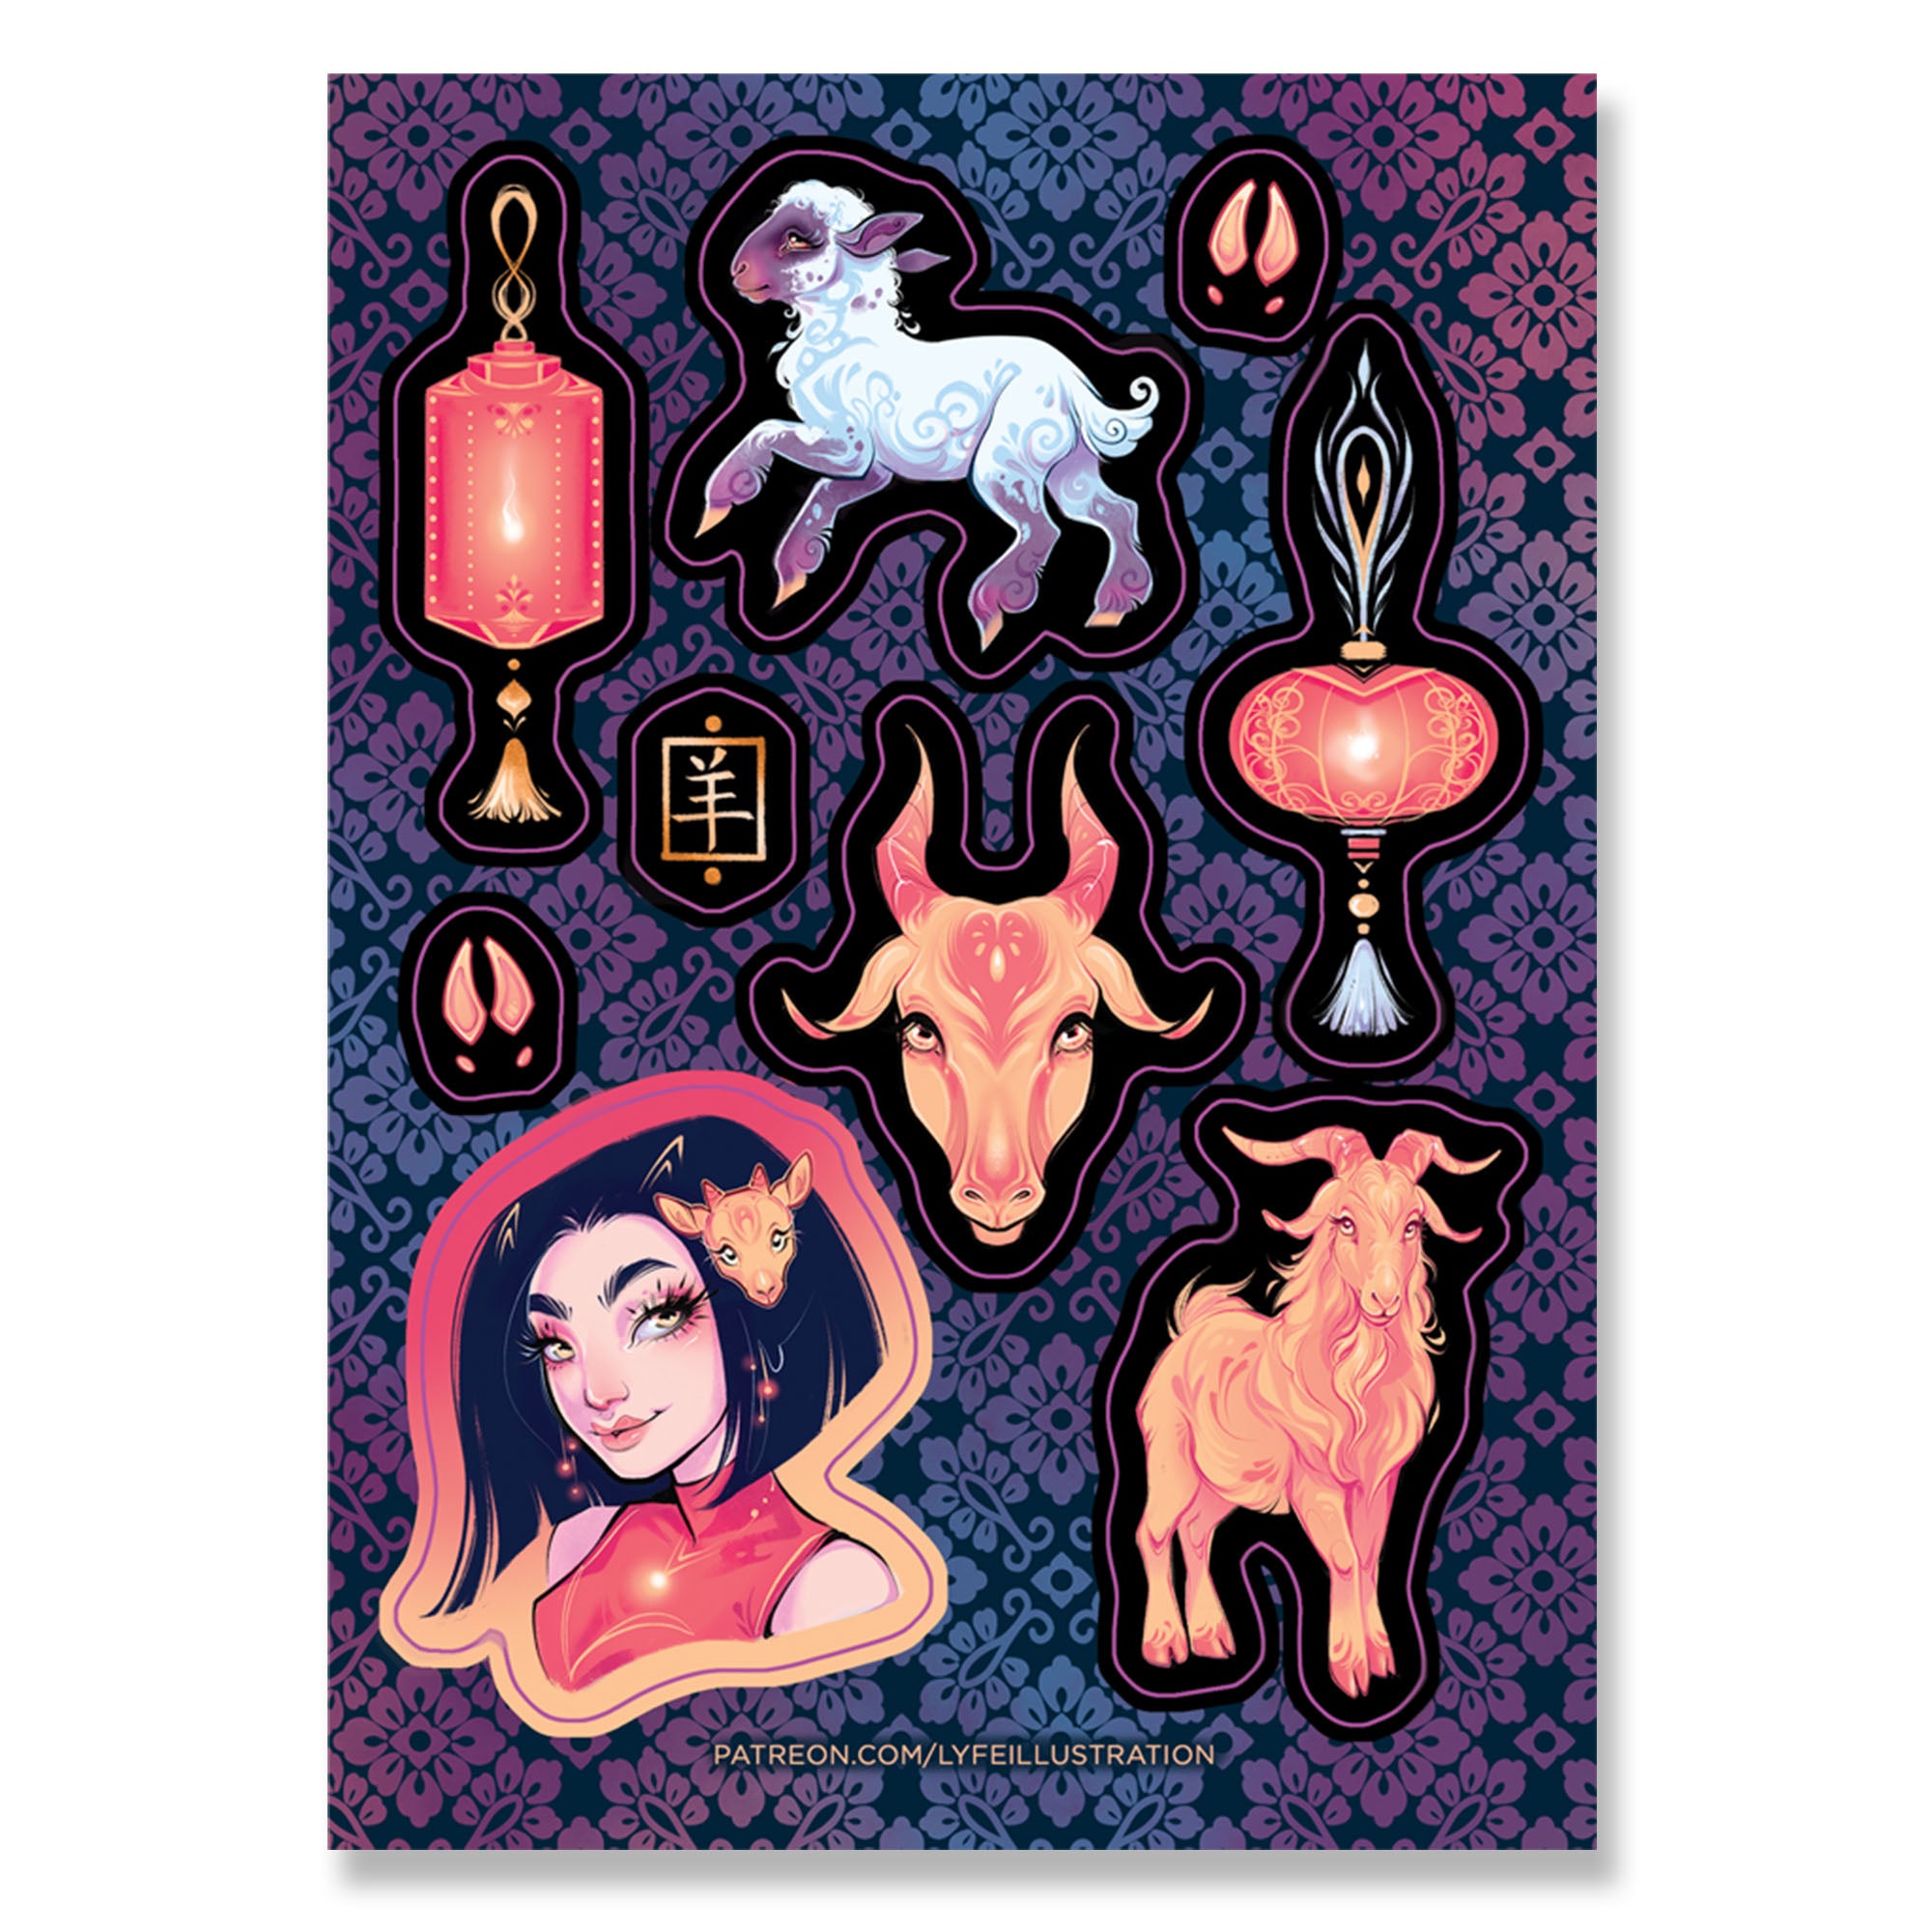 The Goat/Sheep Zodiac Sticker Sheet